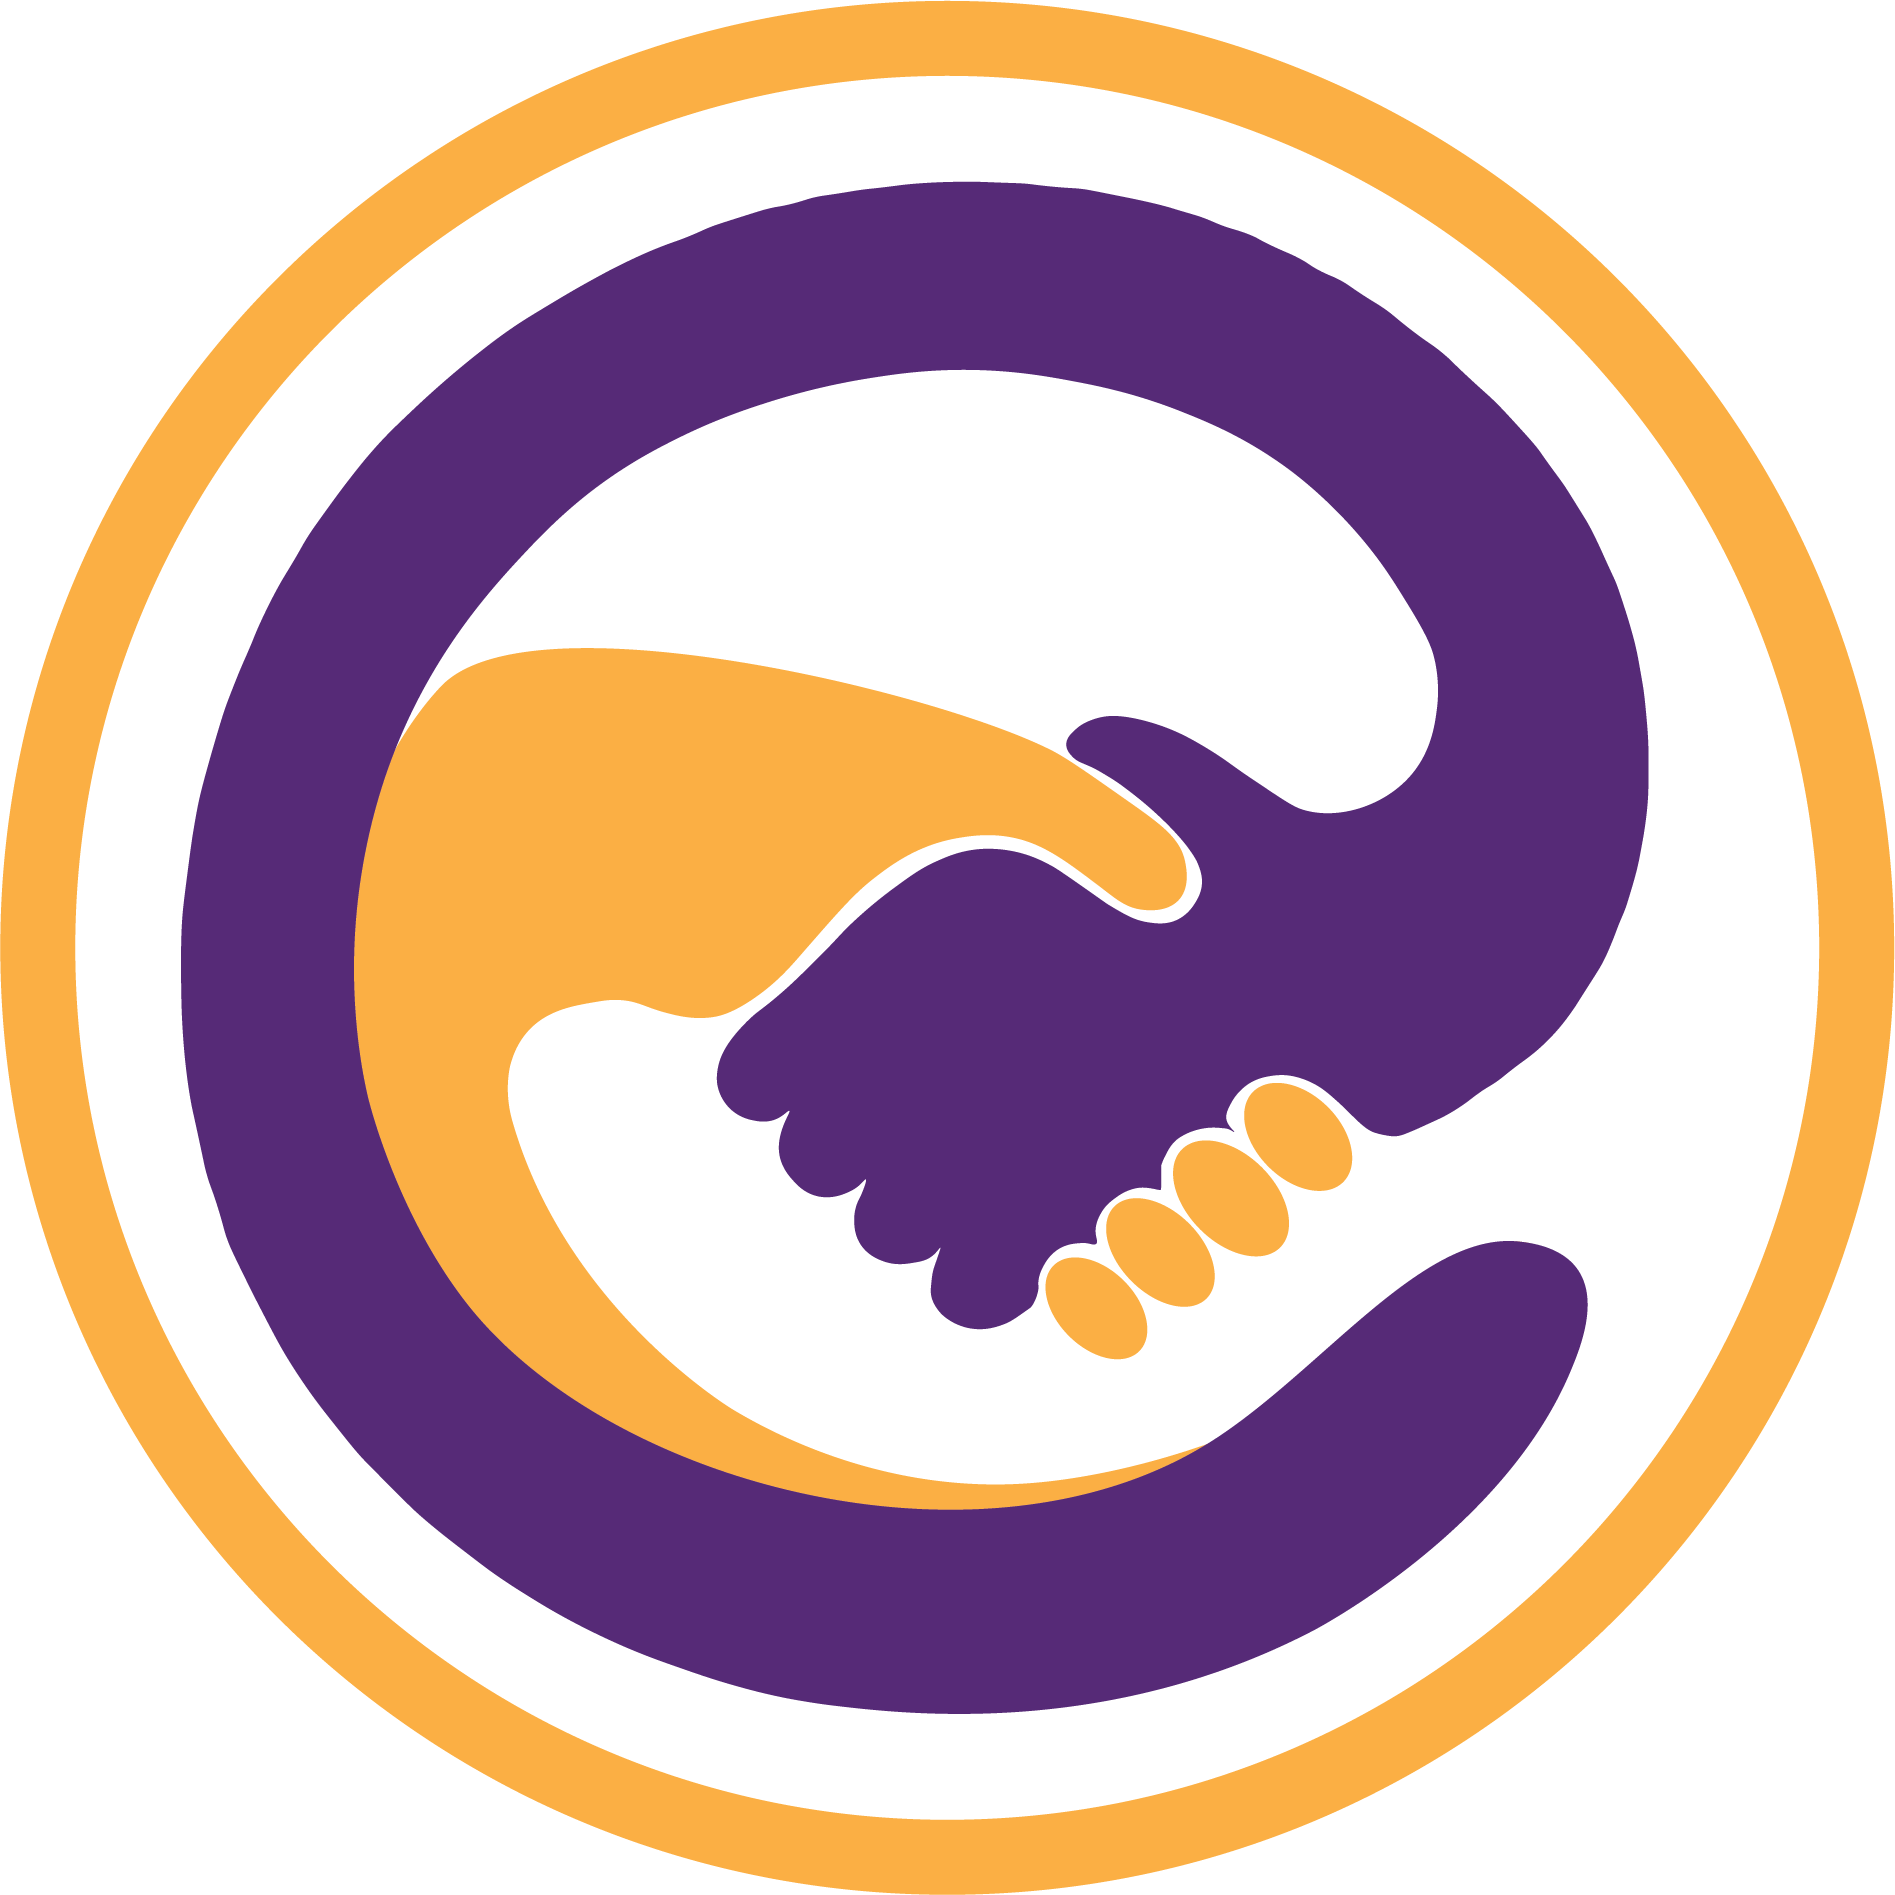 equity arcata logo: orange and purple hands clasped